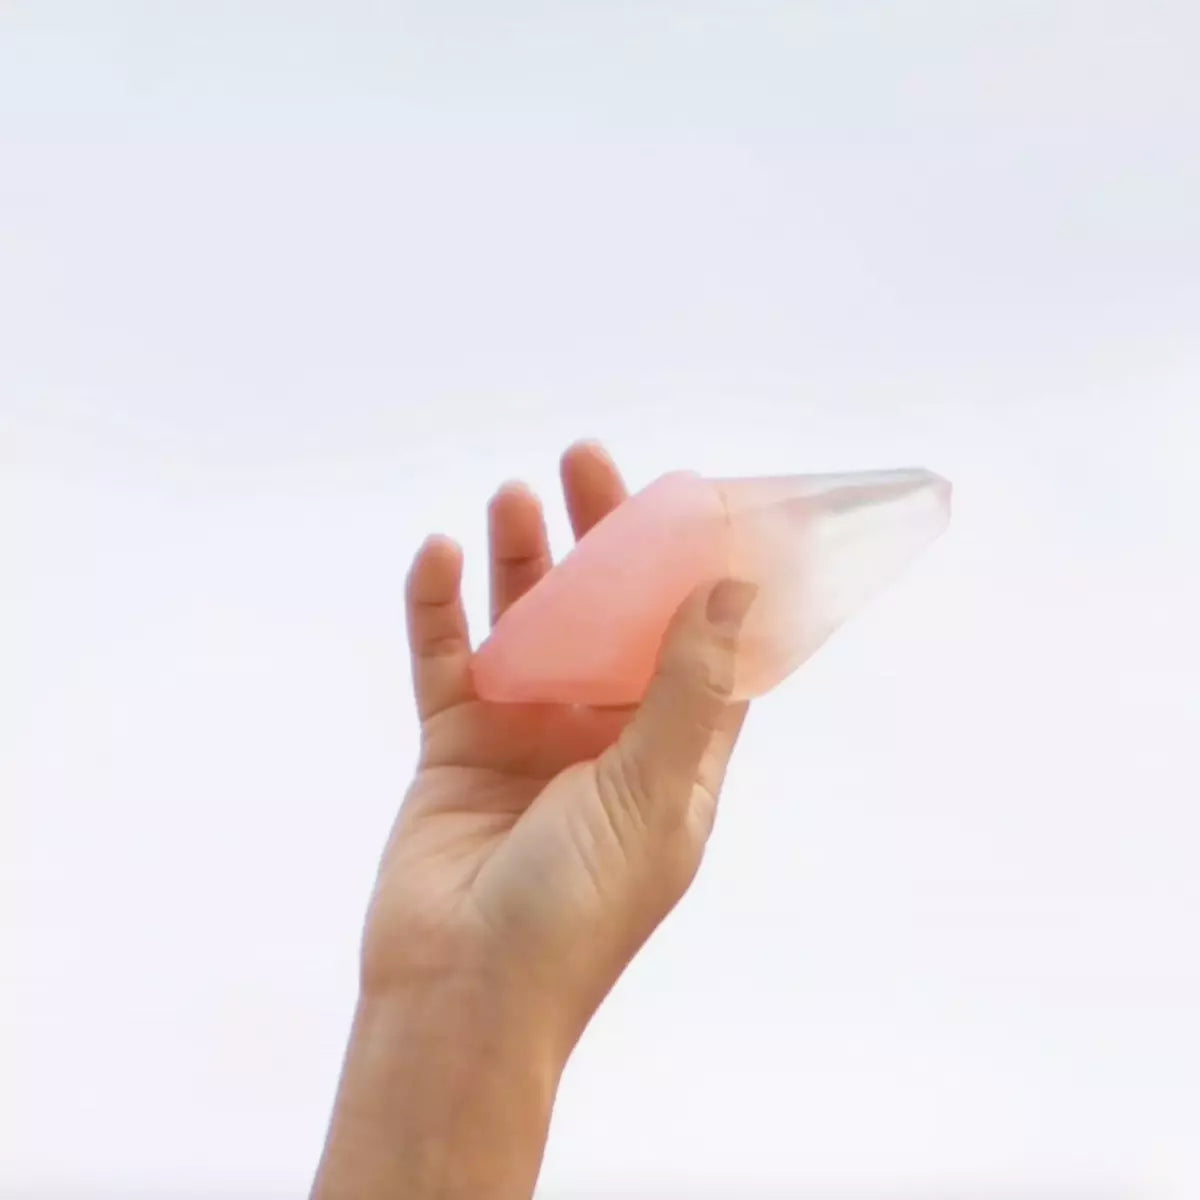 A person's hand holding up a Summer Salt Body Crystal Soap - ROSE QUARTZ - Jasmine, radiating self-love.